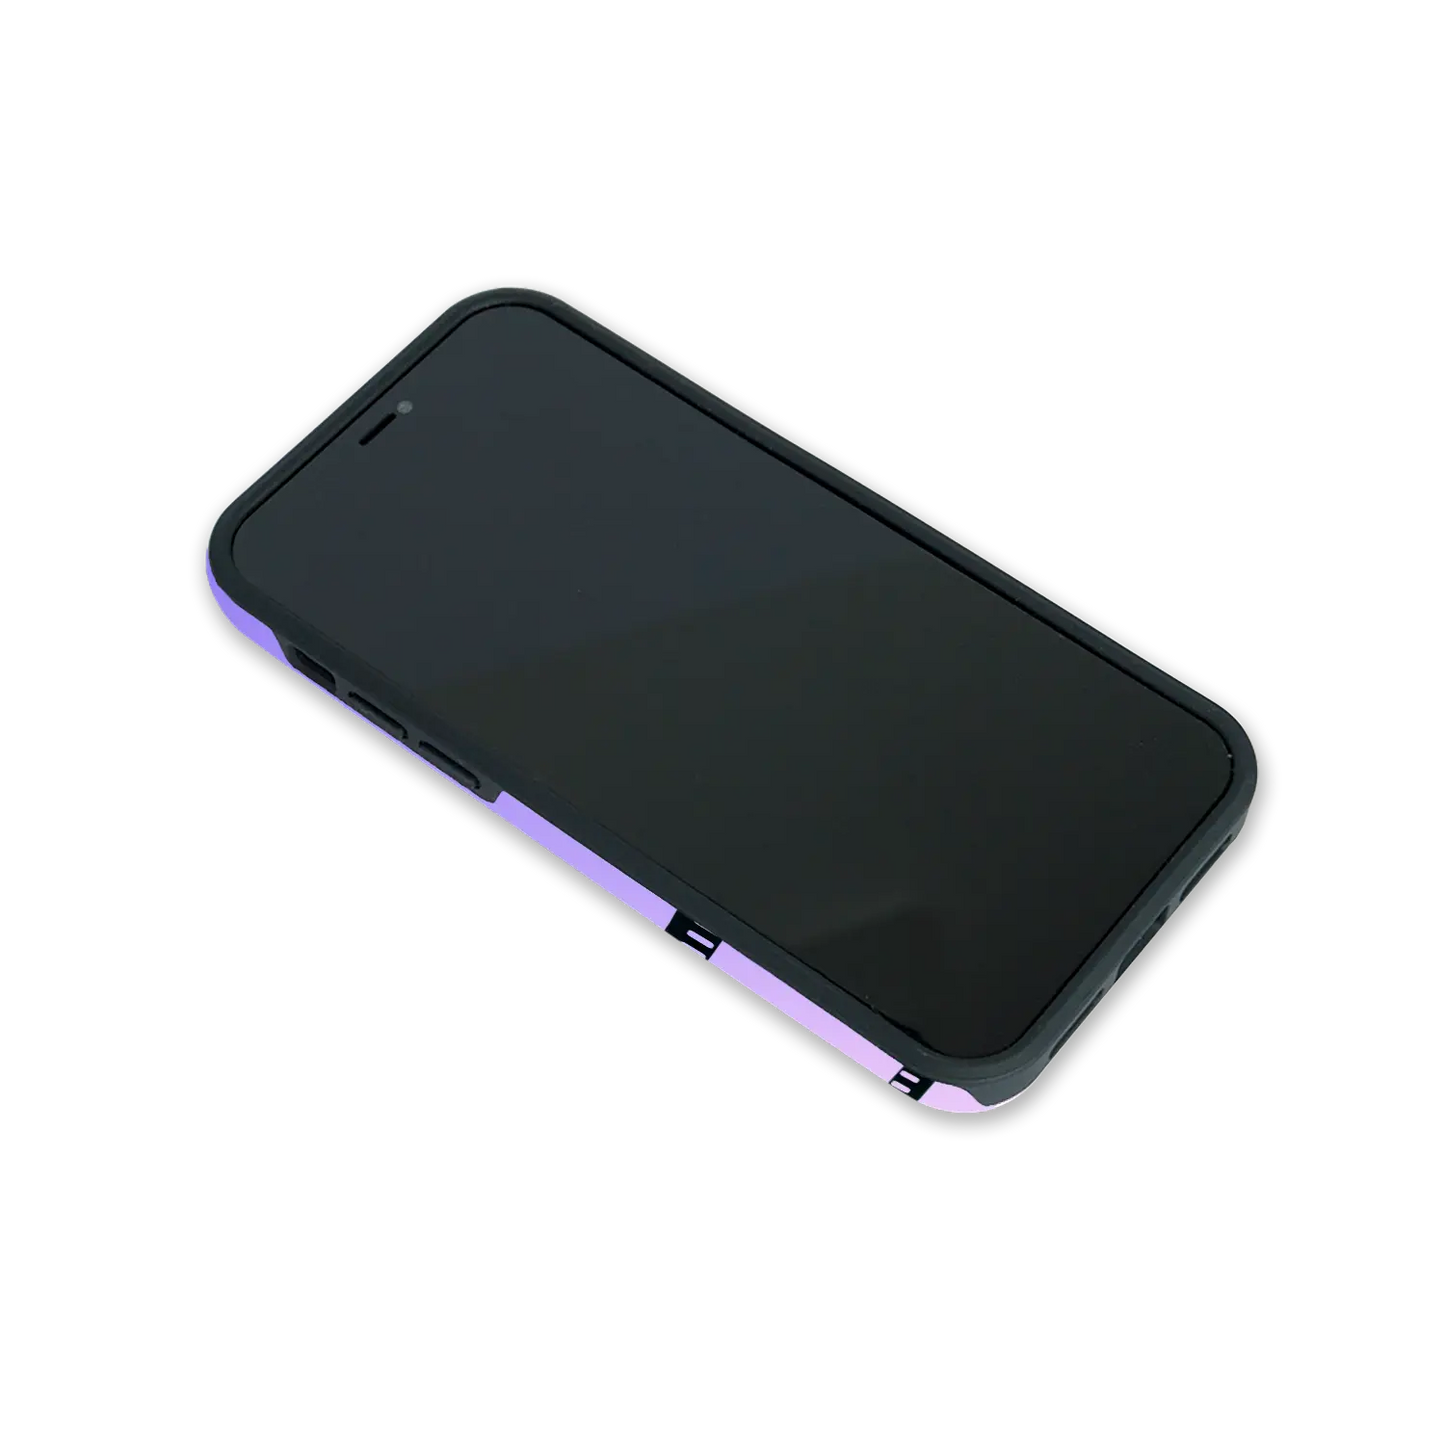 Película sin fin - Carcasa personalizada Galaxy S